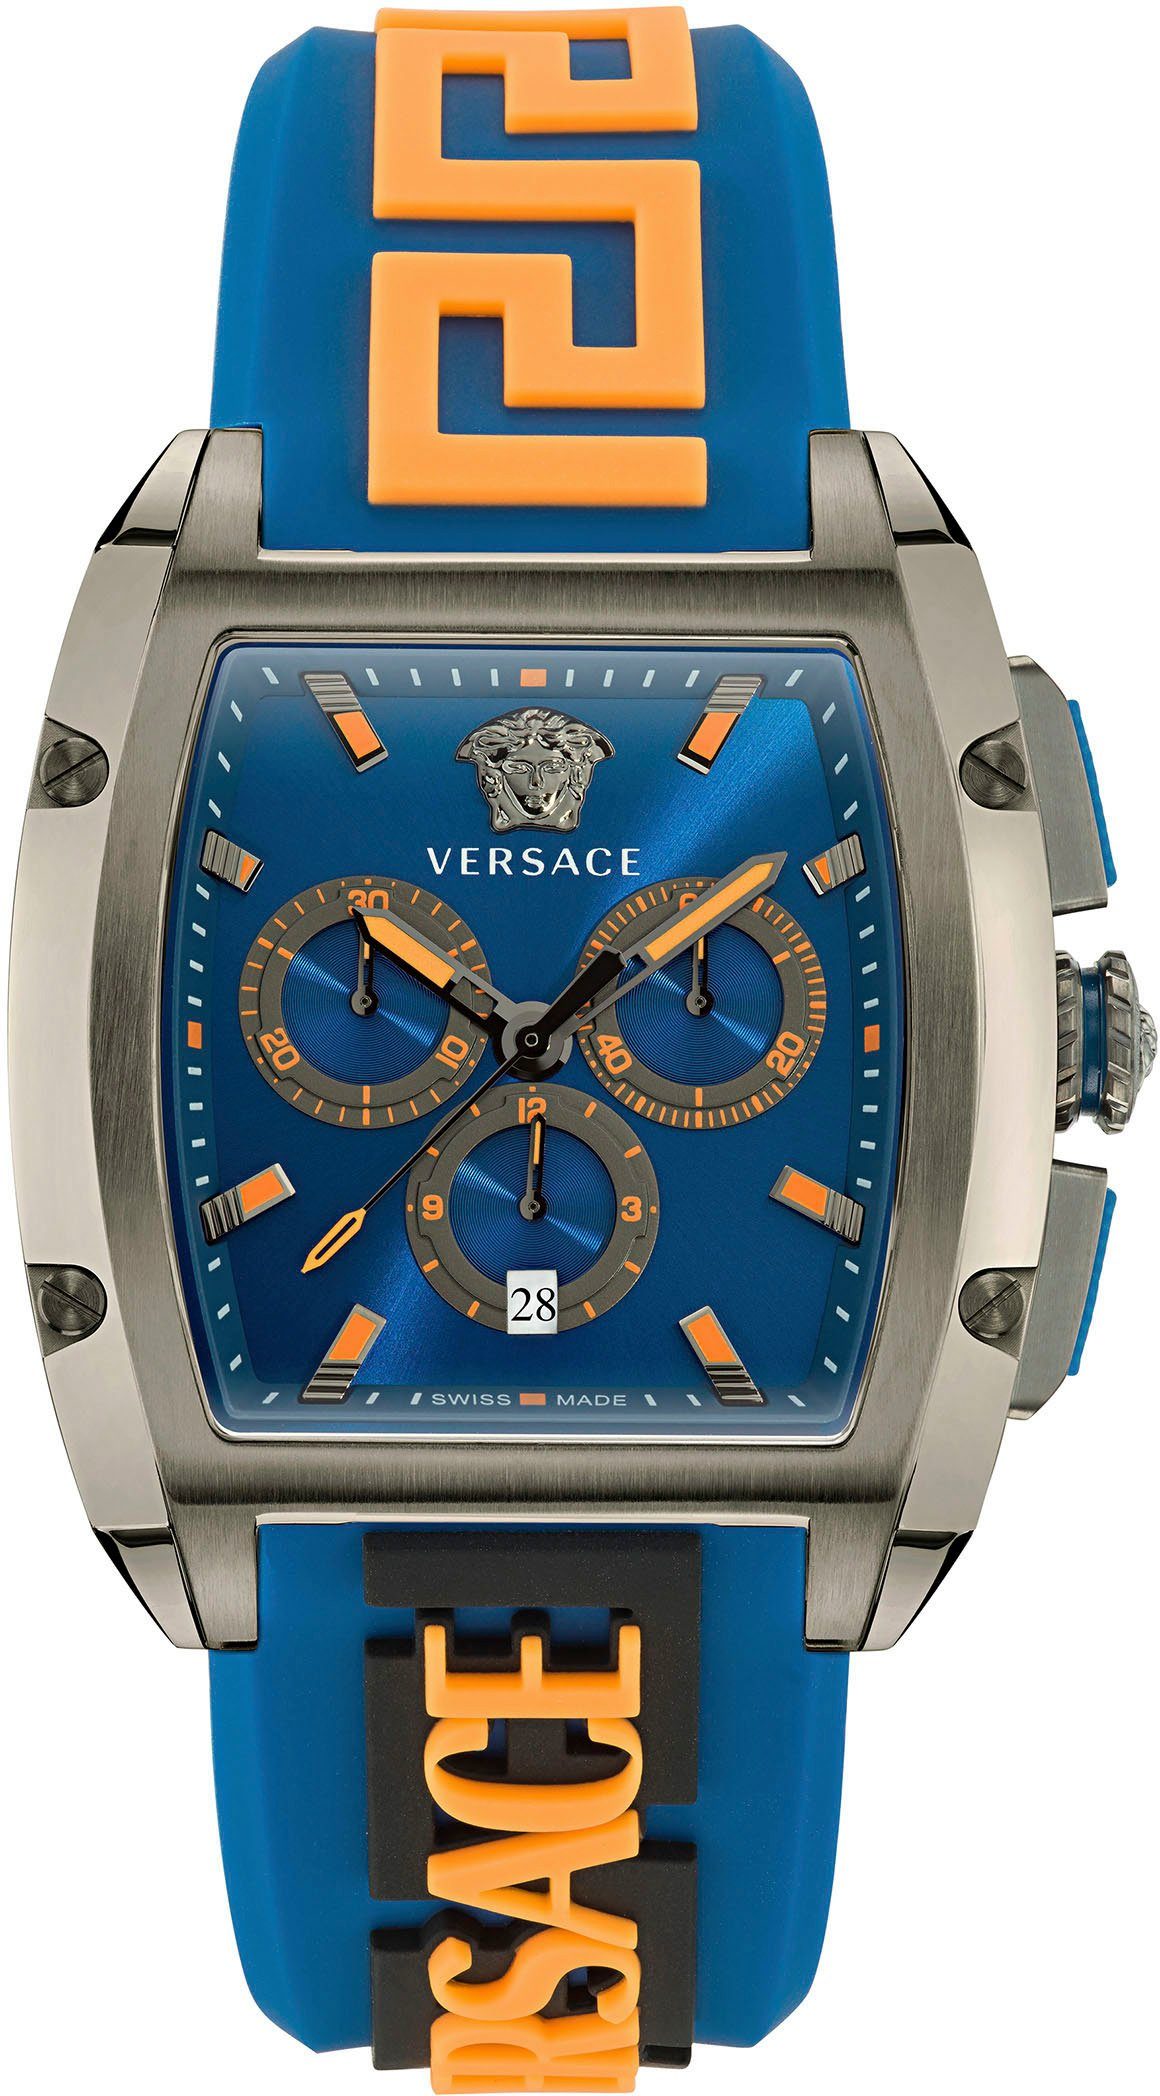 Versace Chronograph DOMINUS, VE6H00323, Quarzuhr, Armbanduhr, Herrenuhr, Saphirglas, Stoppfunktion, Swiss Made